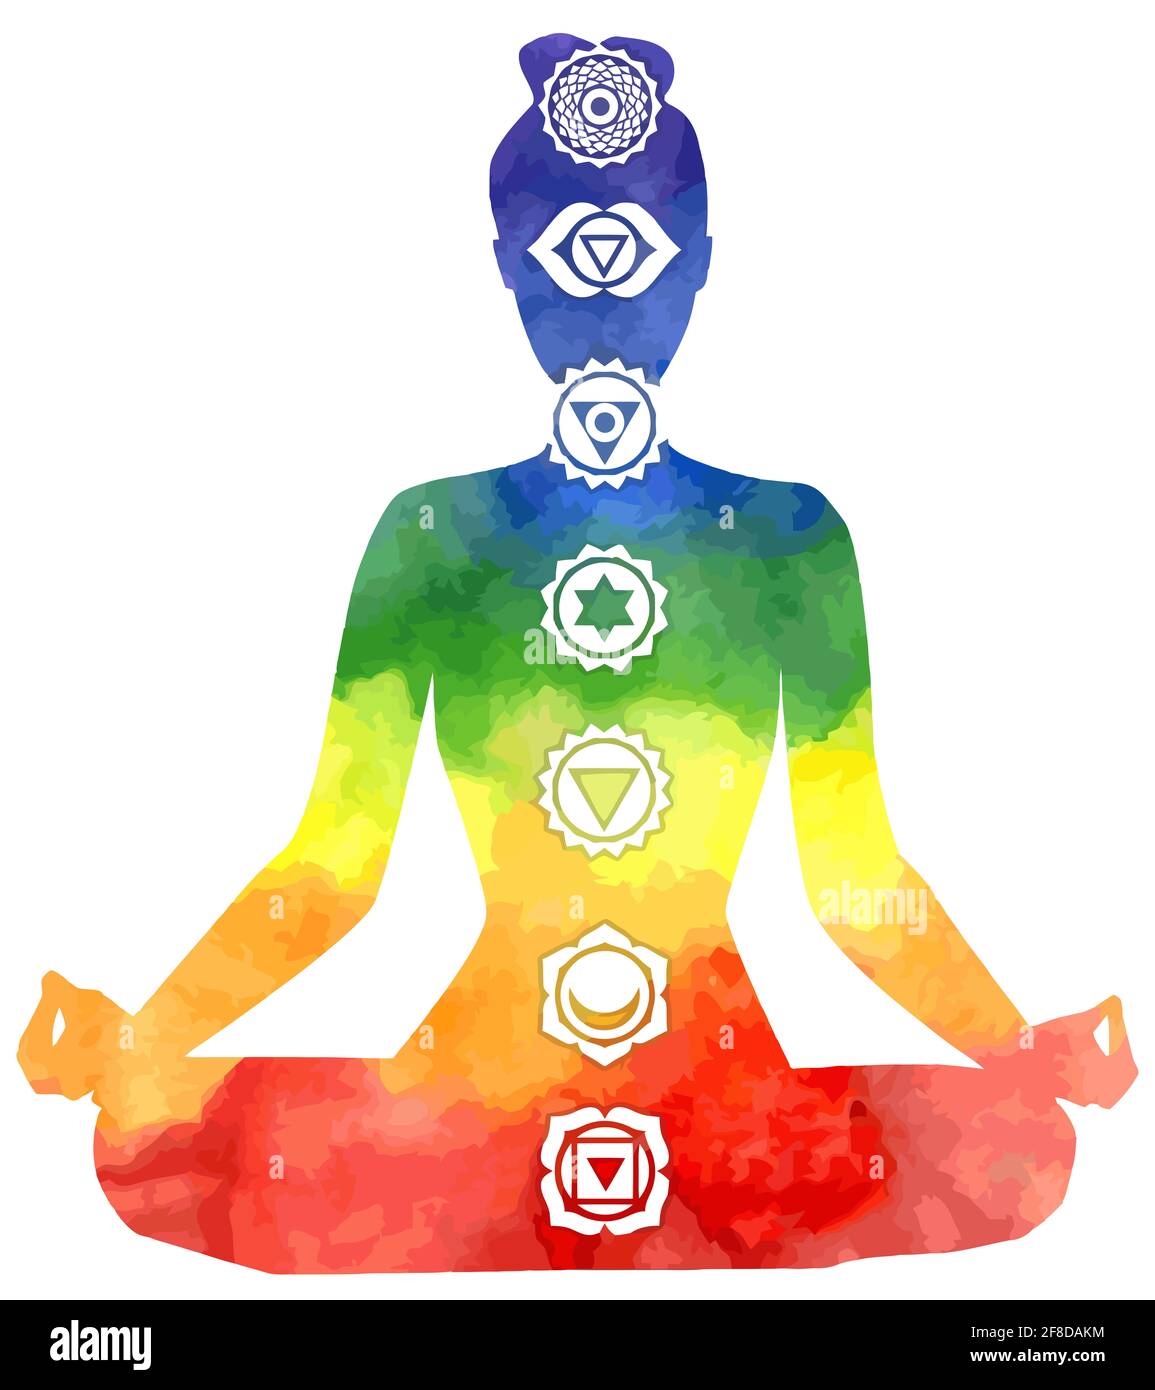 yoga guérison chakras pleine conscience méditation spirituelle mantra illustration kundalini Banque D'Images